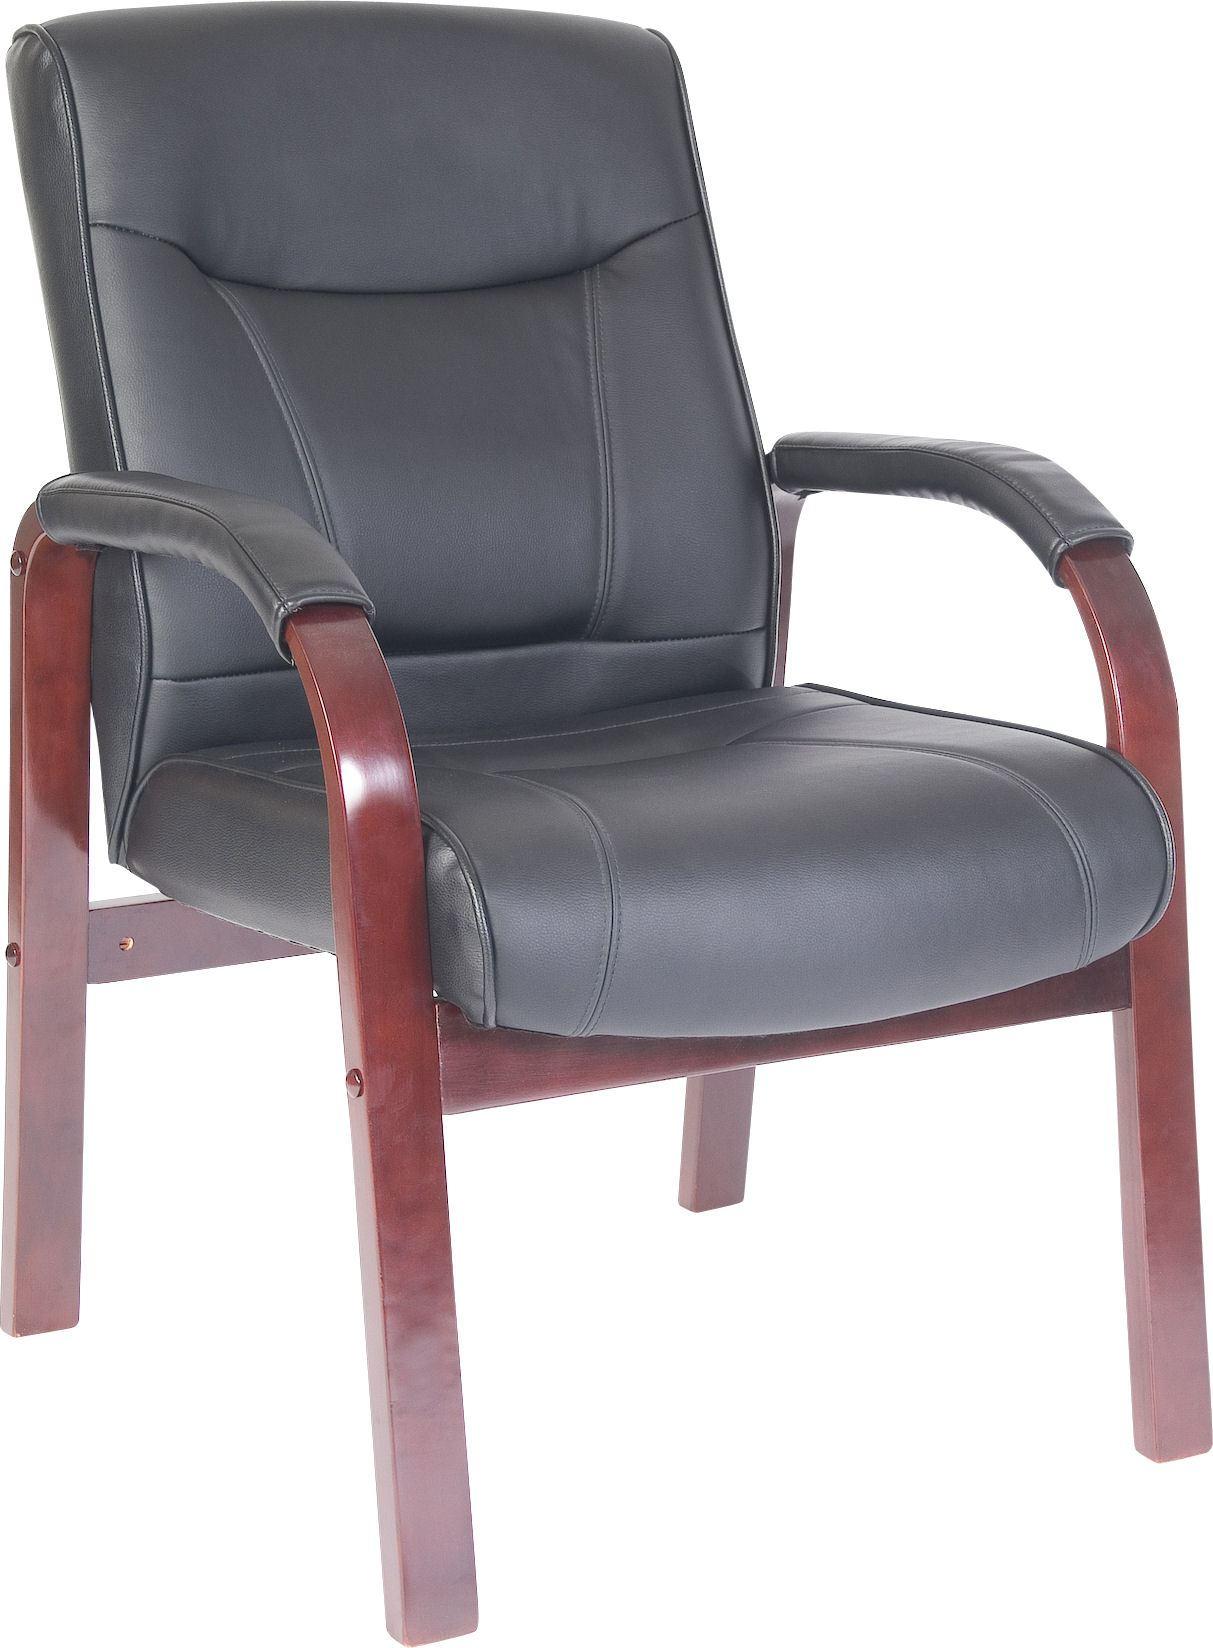 Kingston leather visitor chair(mahogany) - crimblefest furniture - image 1